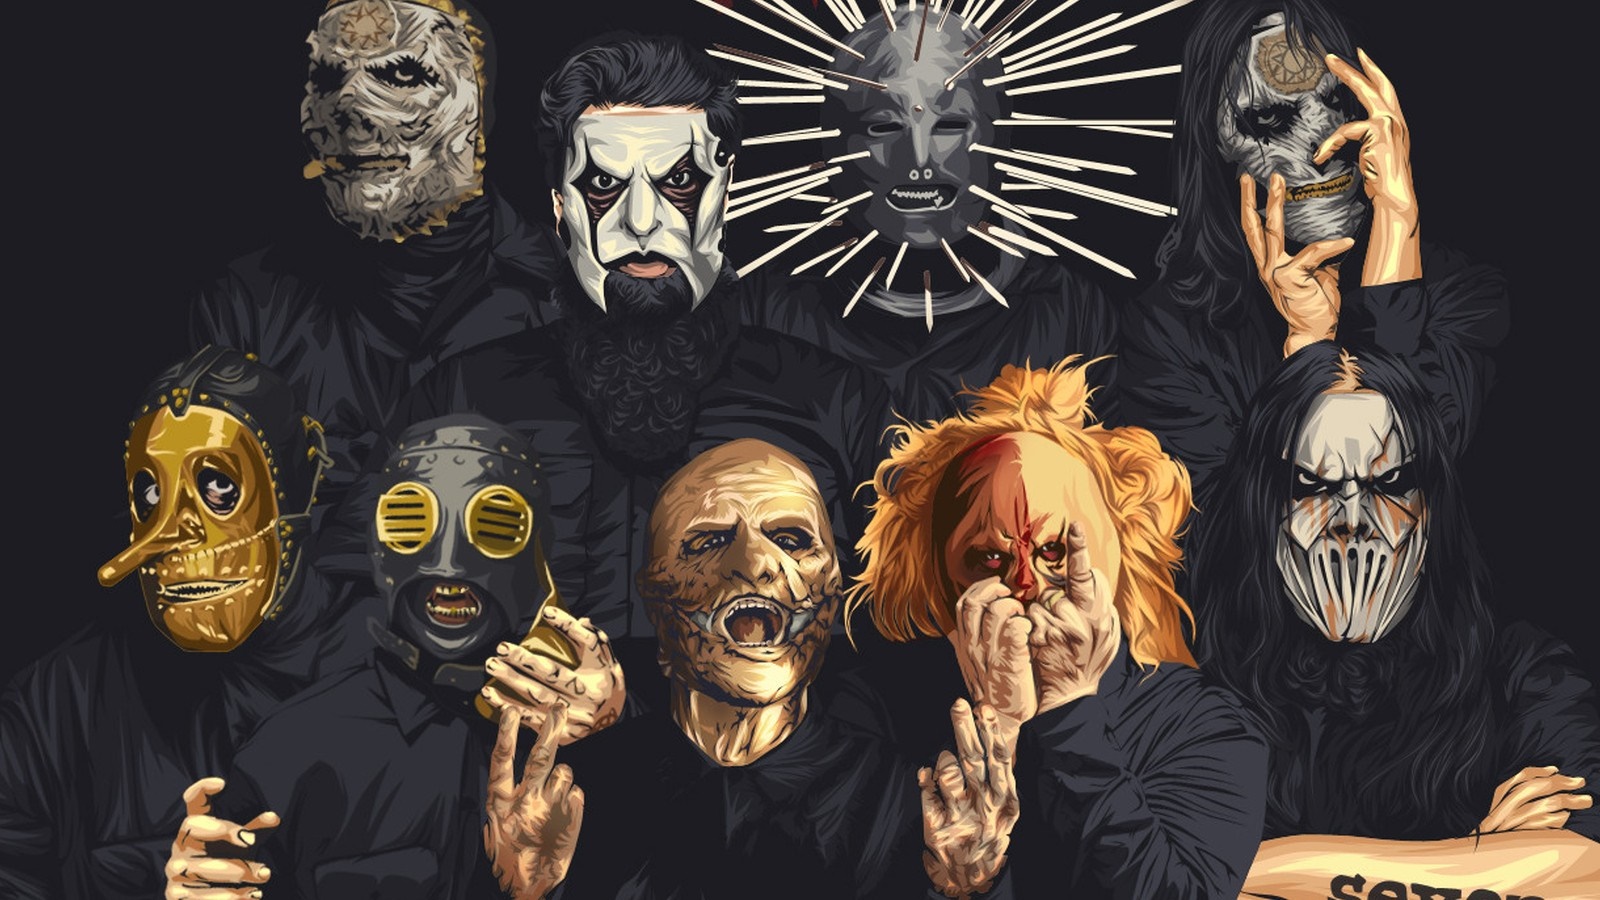 illustration, fan art, metal band, comics, mythology, Slipknot, clothing, Nu Metal, costume, screenshot Gallery HD Wallpaper